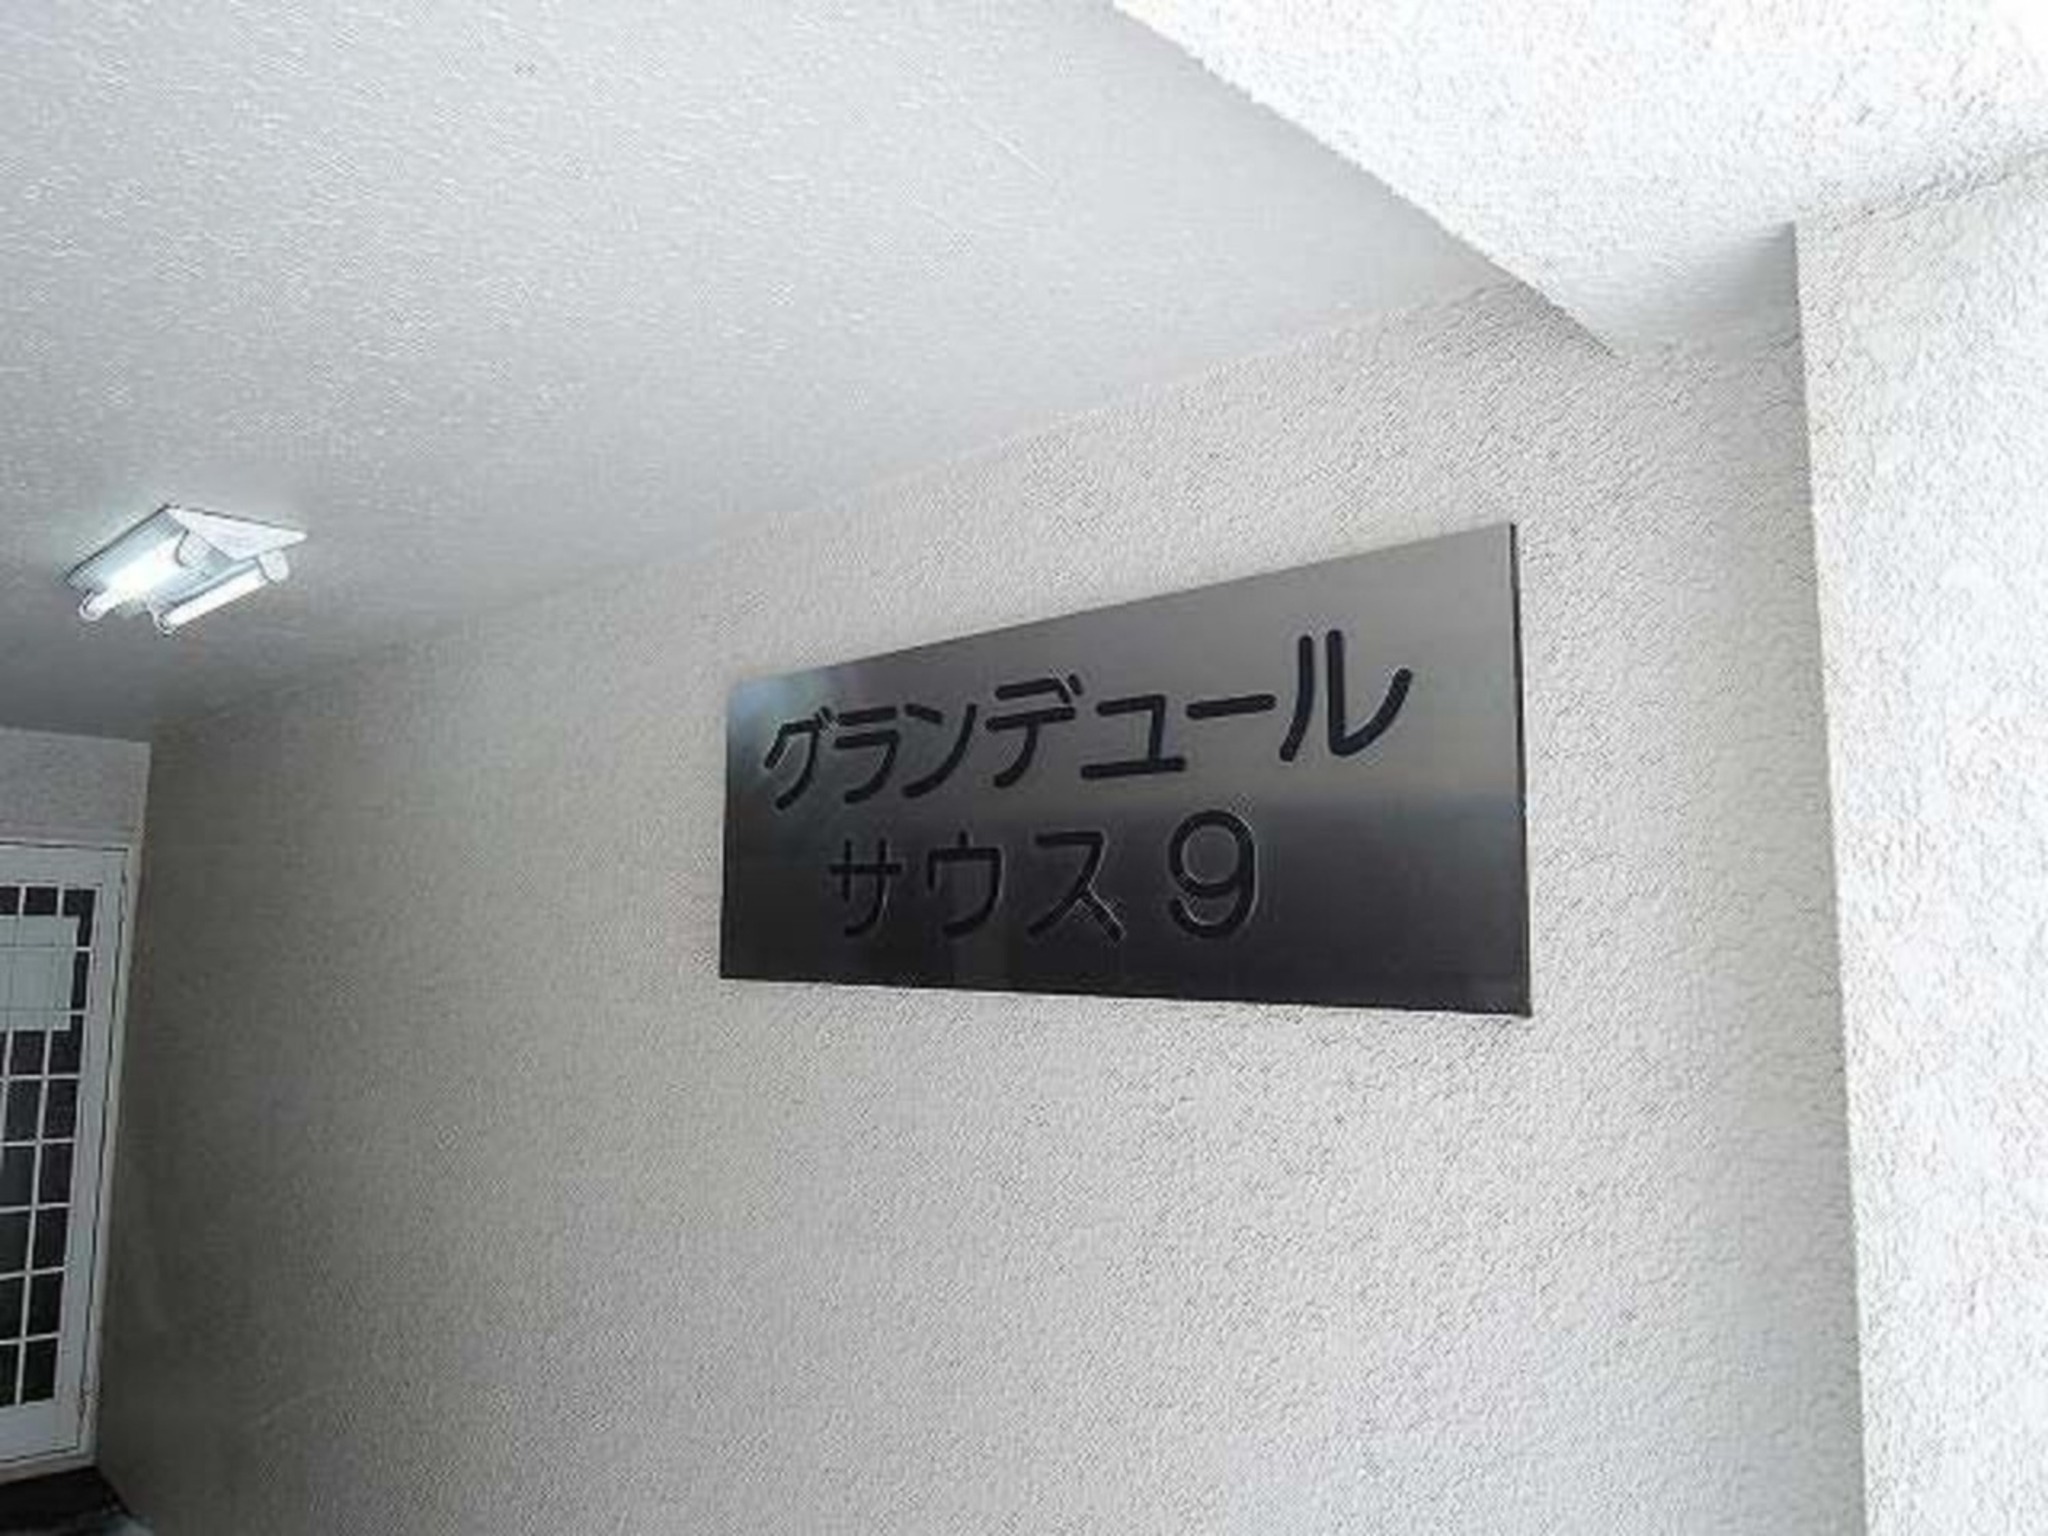 South House S1 201 Studio Room Near Susukino